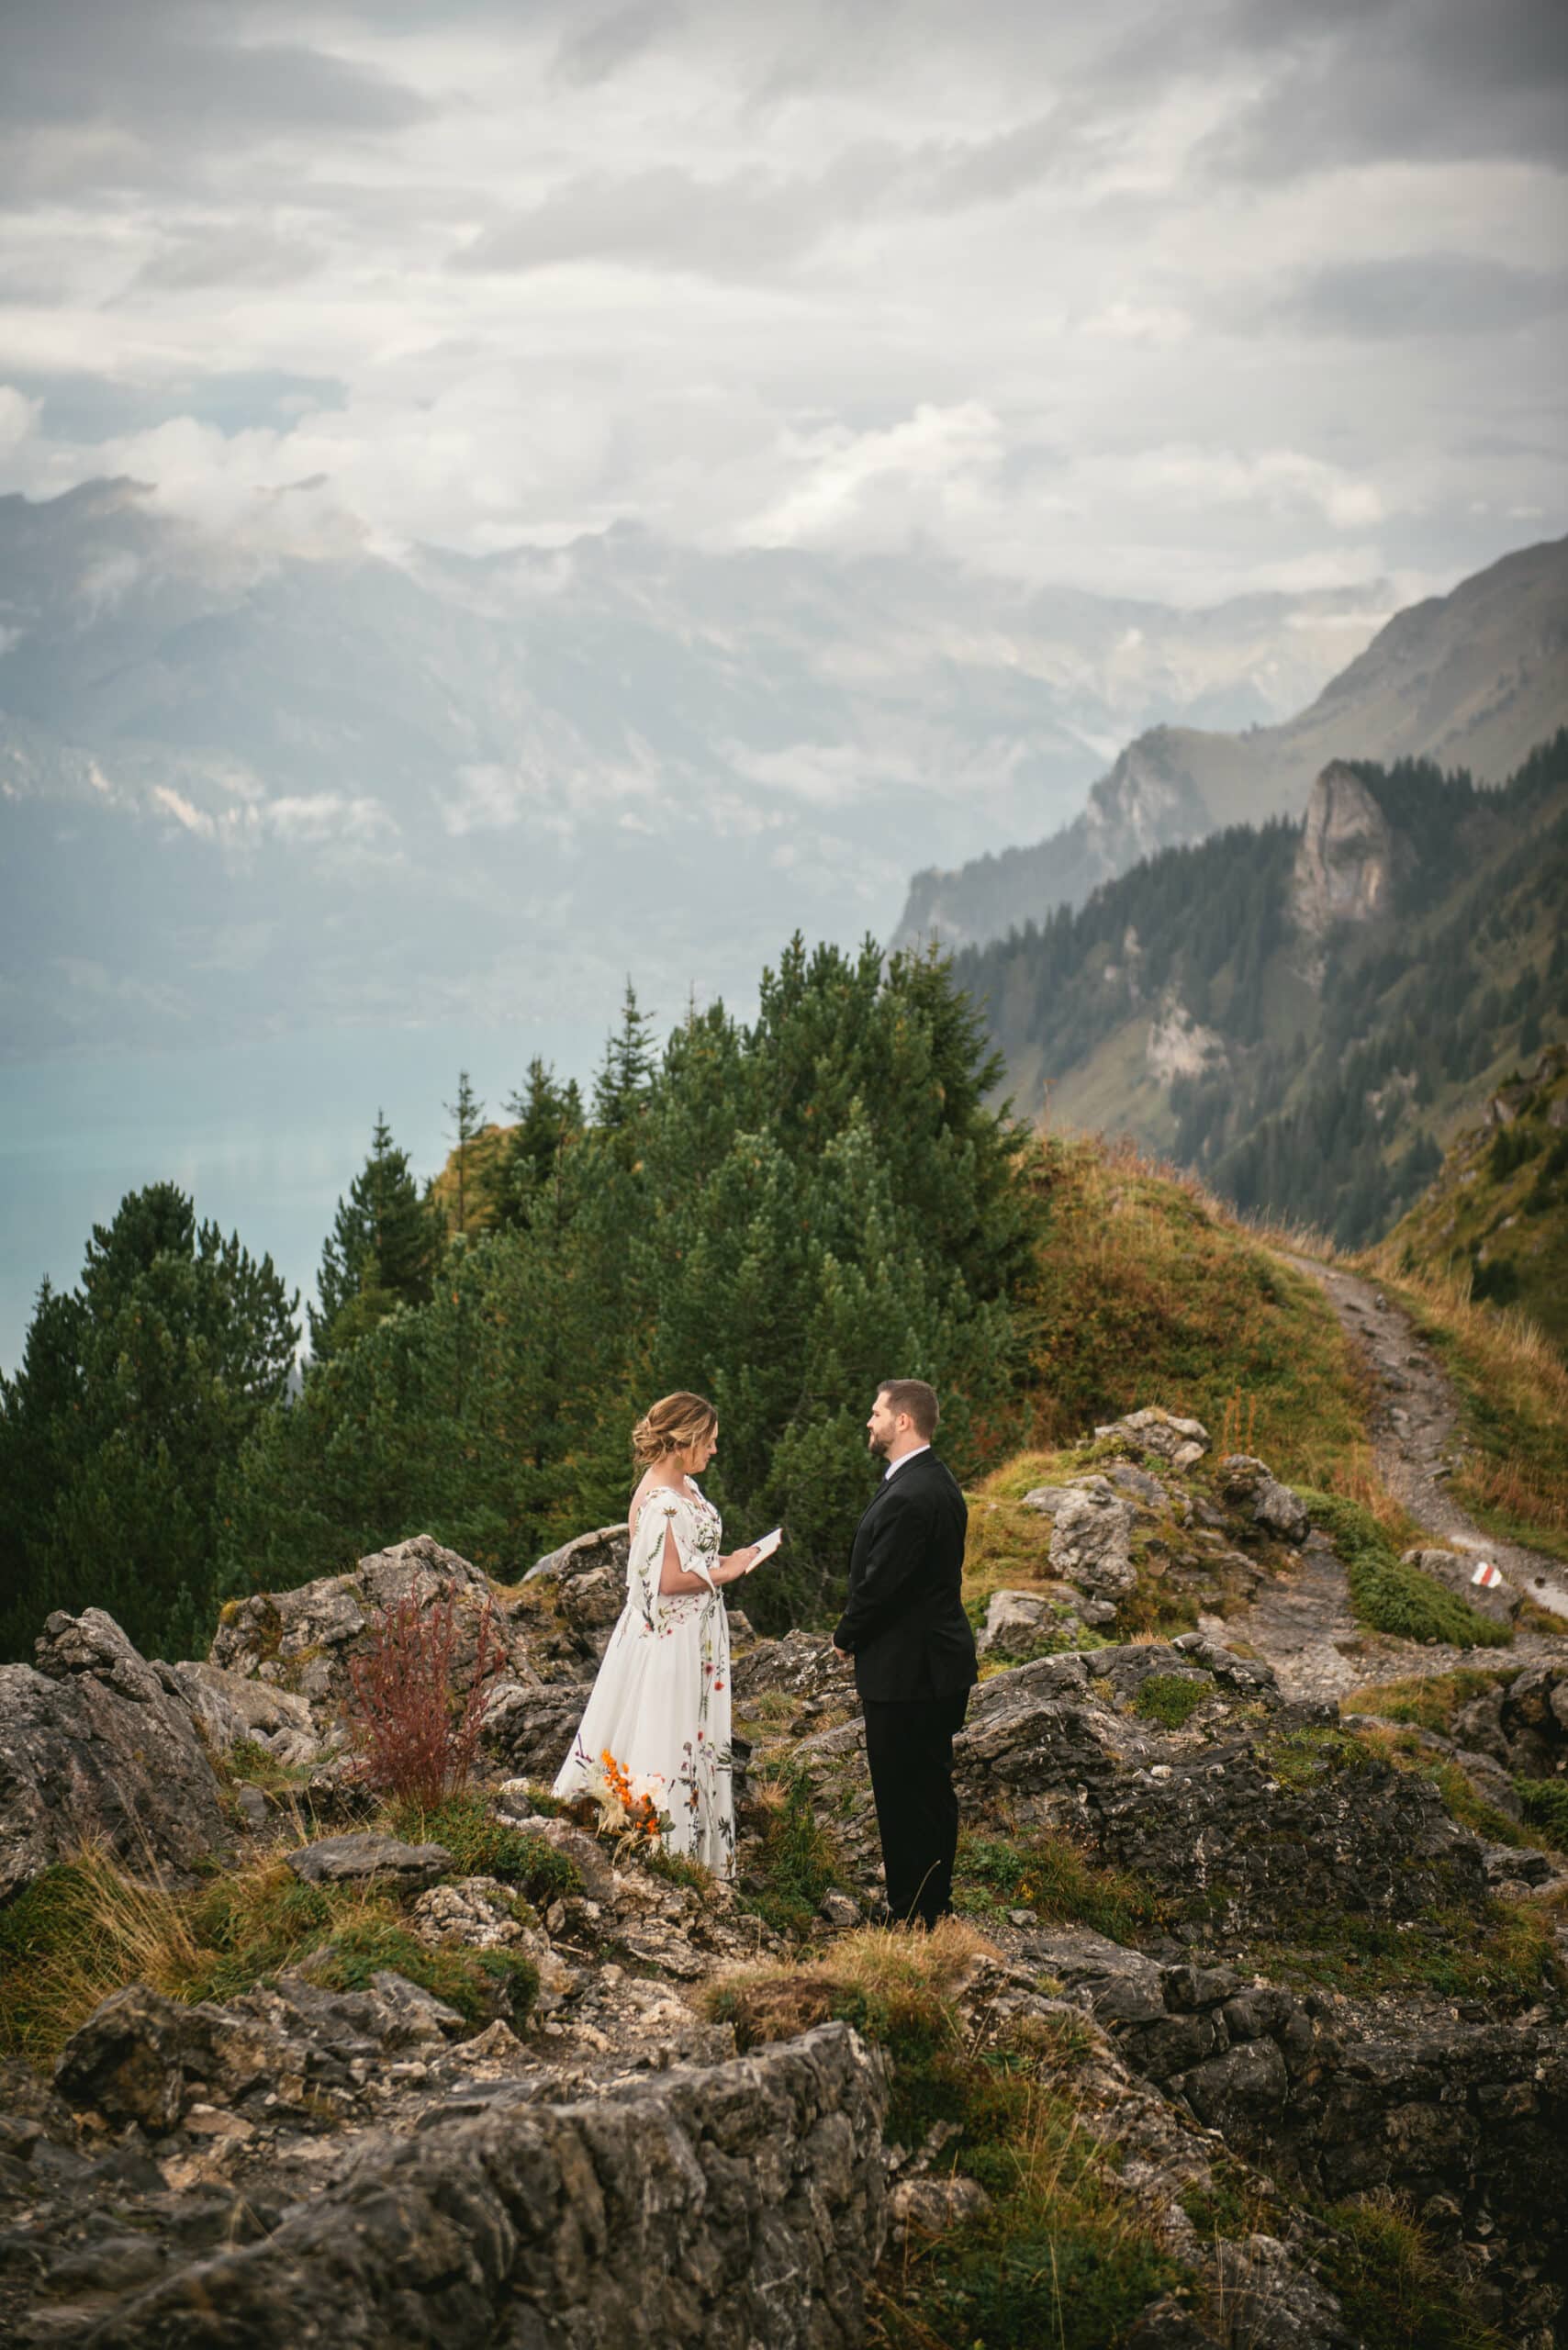 Couple exchanging their vows at Schynigge Platte during their elopement in Switzerland